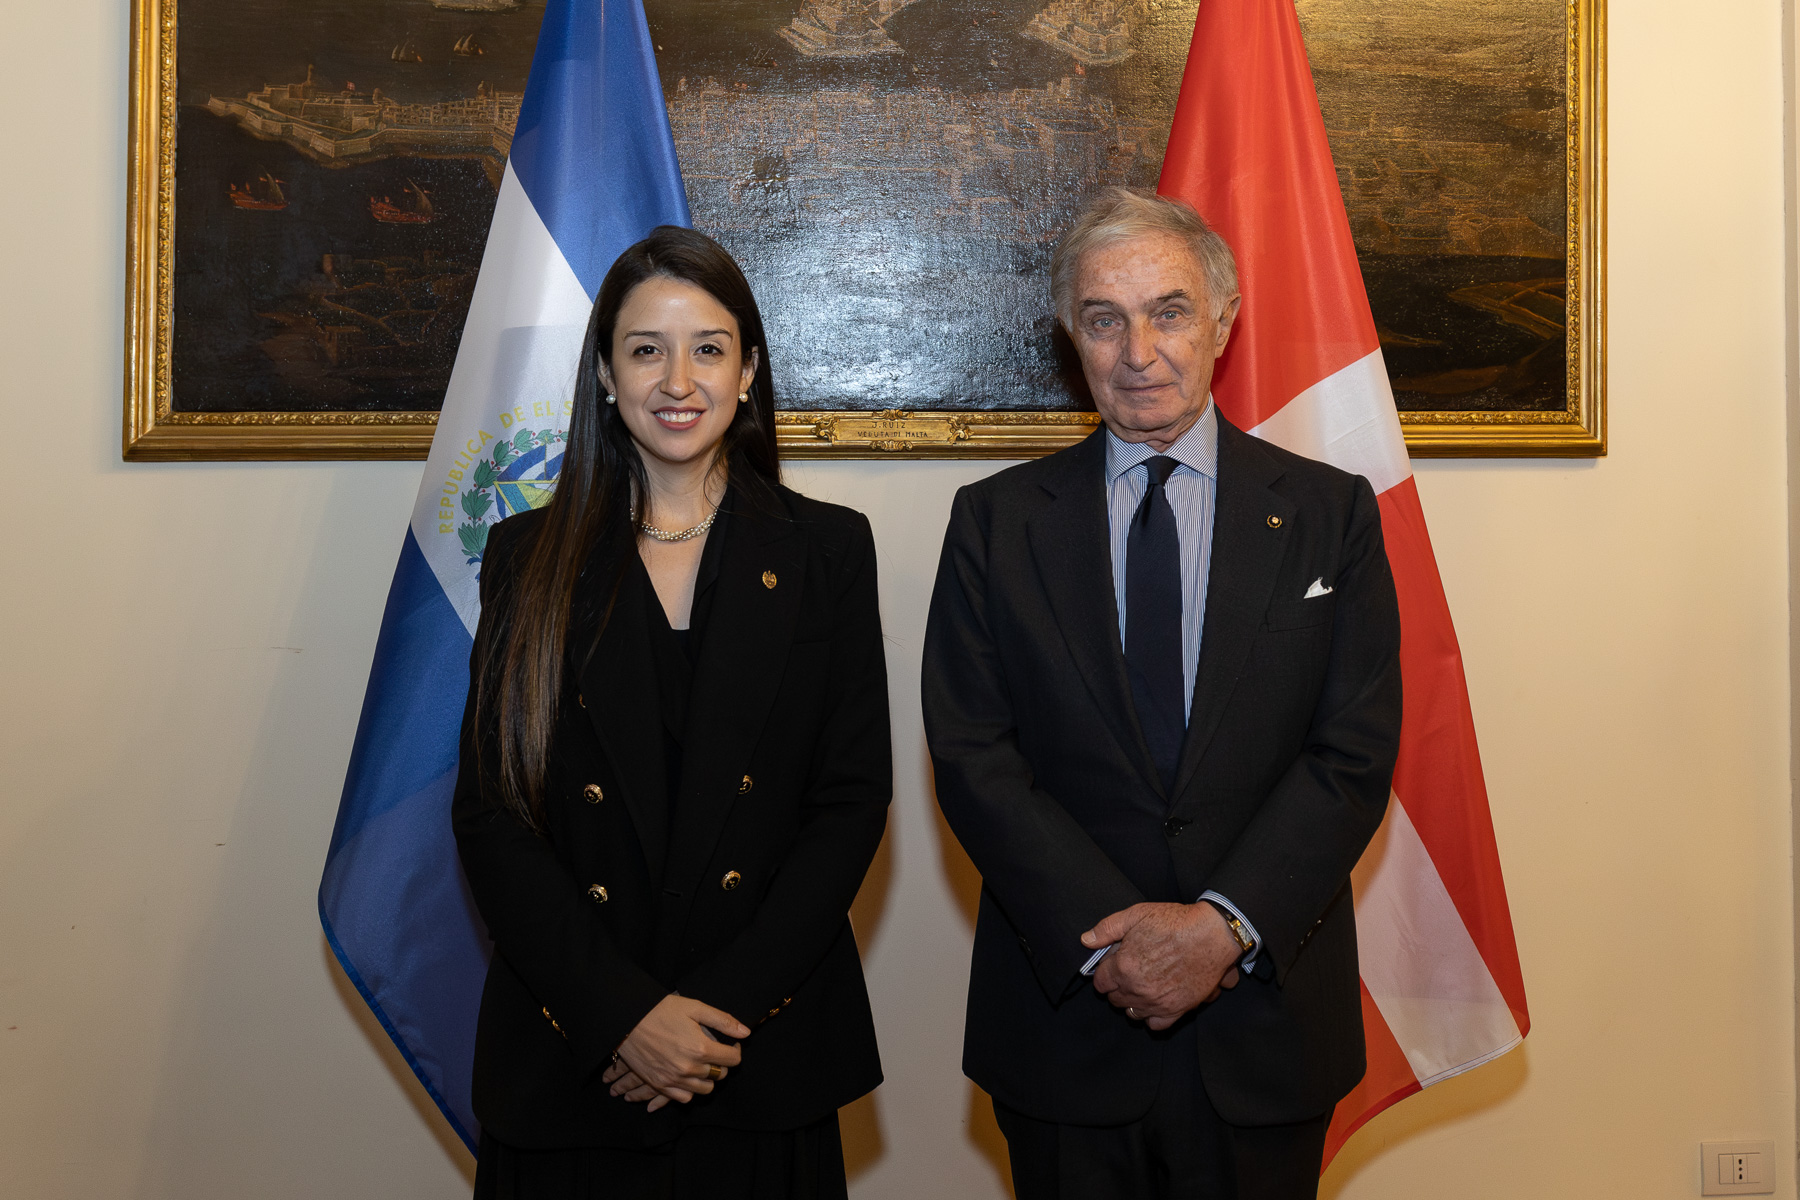 Deputy Minister Foreign El Salvador Order of Malta